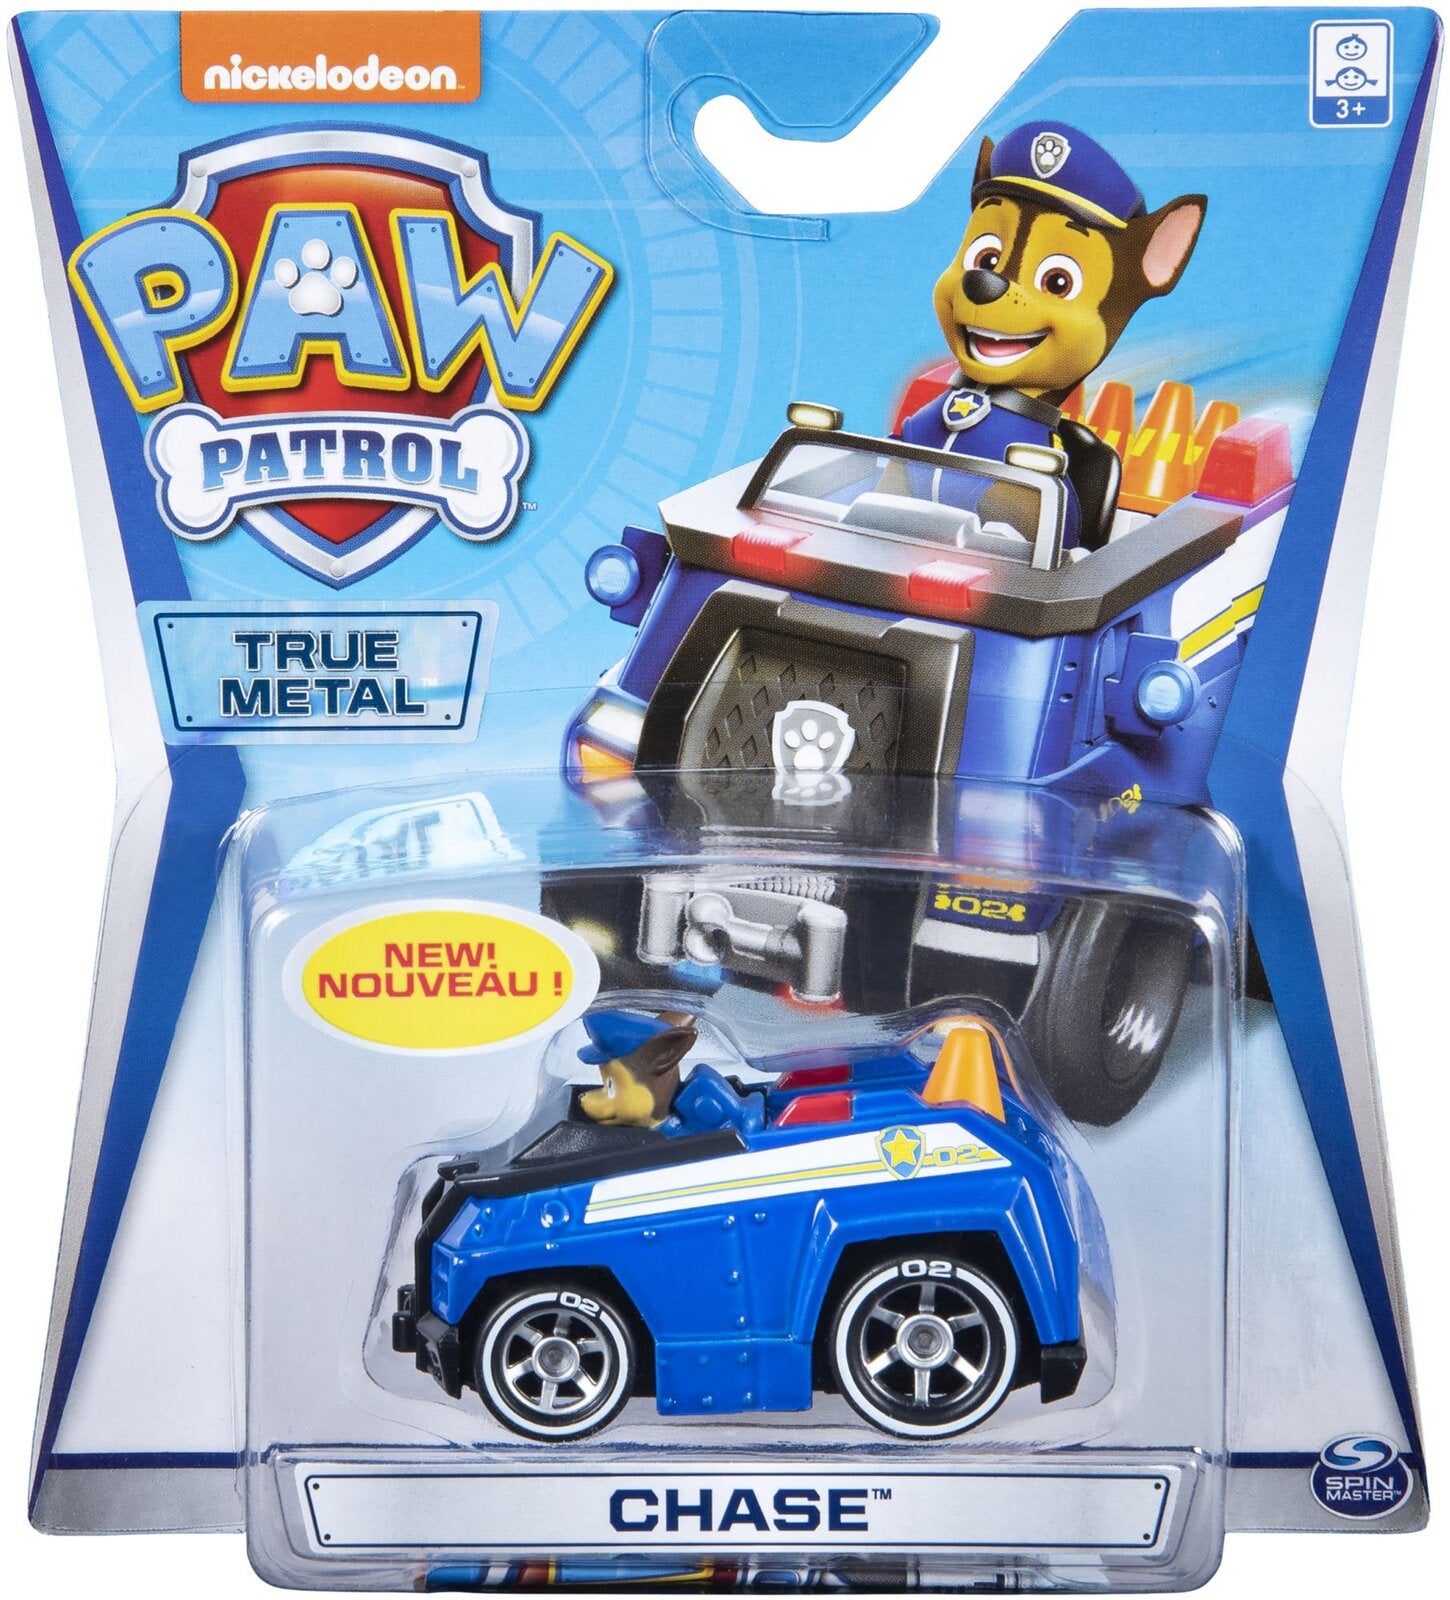 Paw Patrol True Metal Vehicle 1:55 - Chase